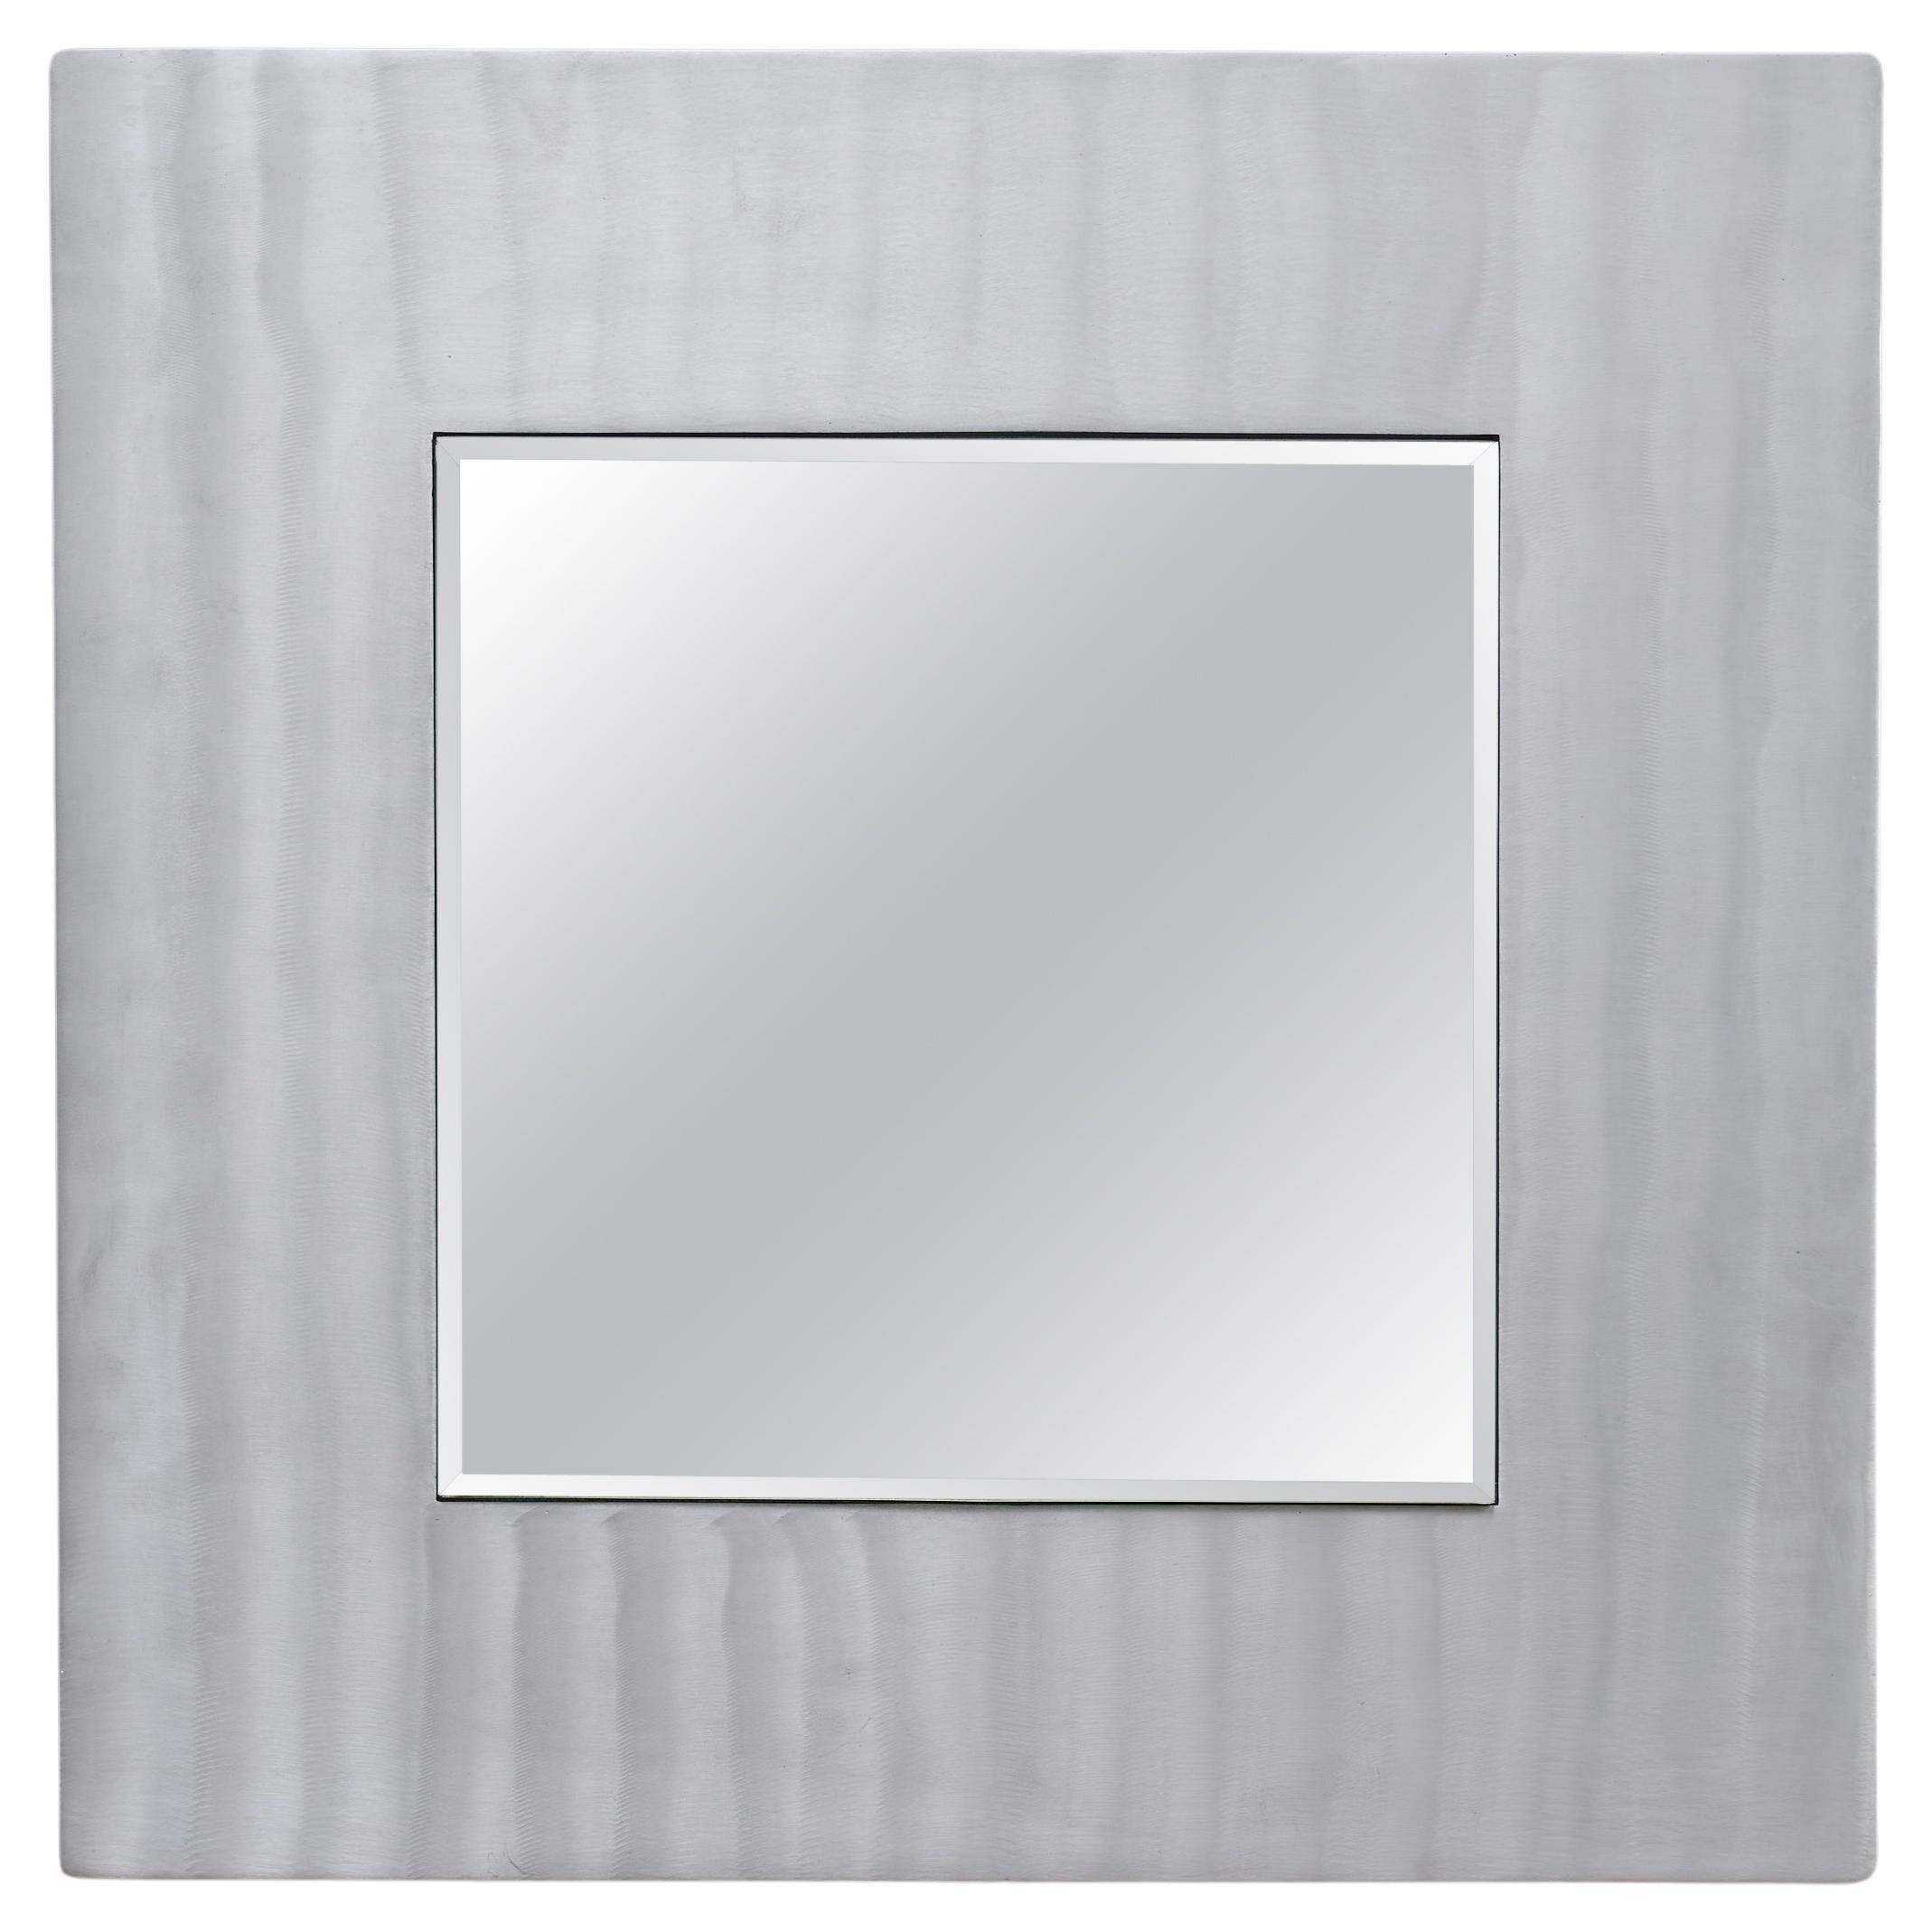 Lorenzo Burchiellaro: Square Wall Mirror in Etched Aluminum, Italy 1970s For Sale